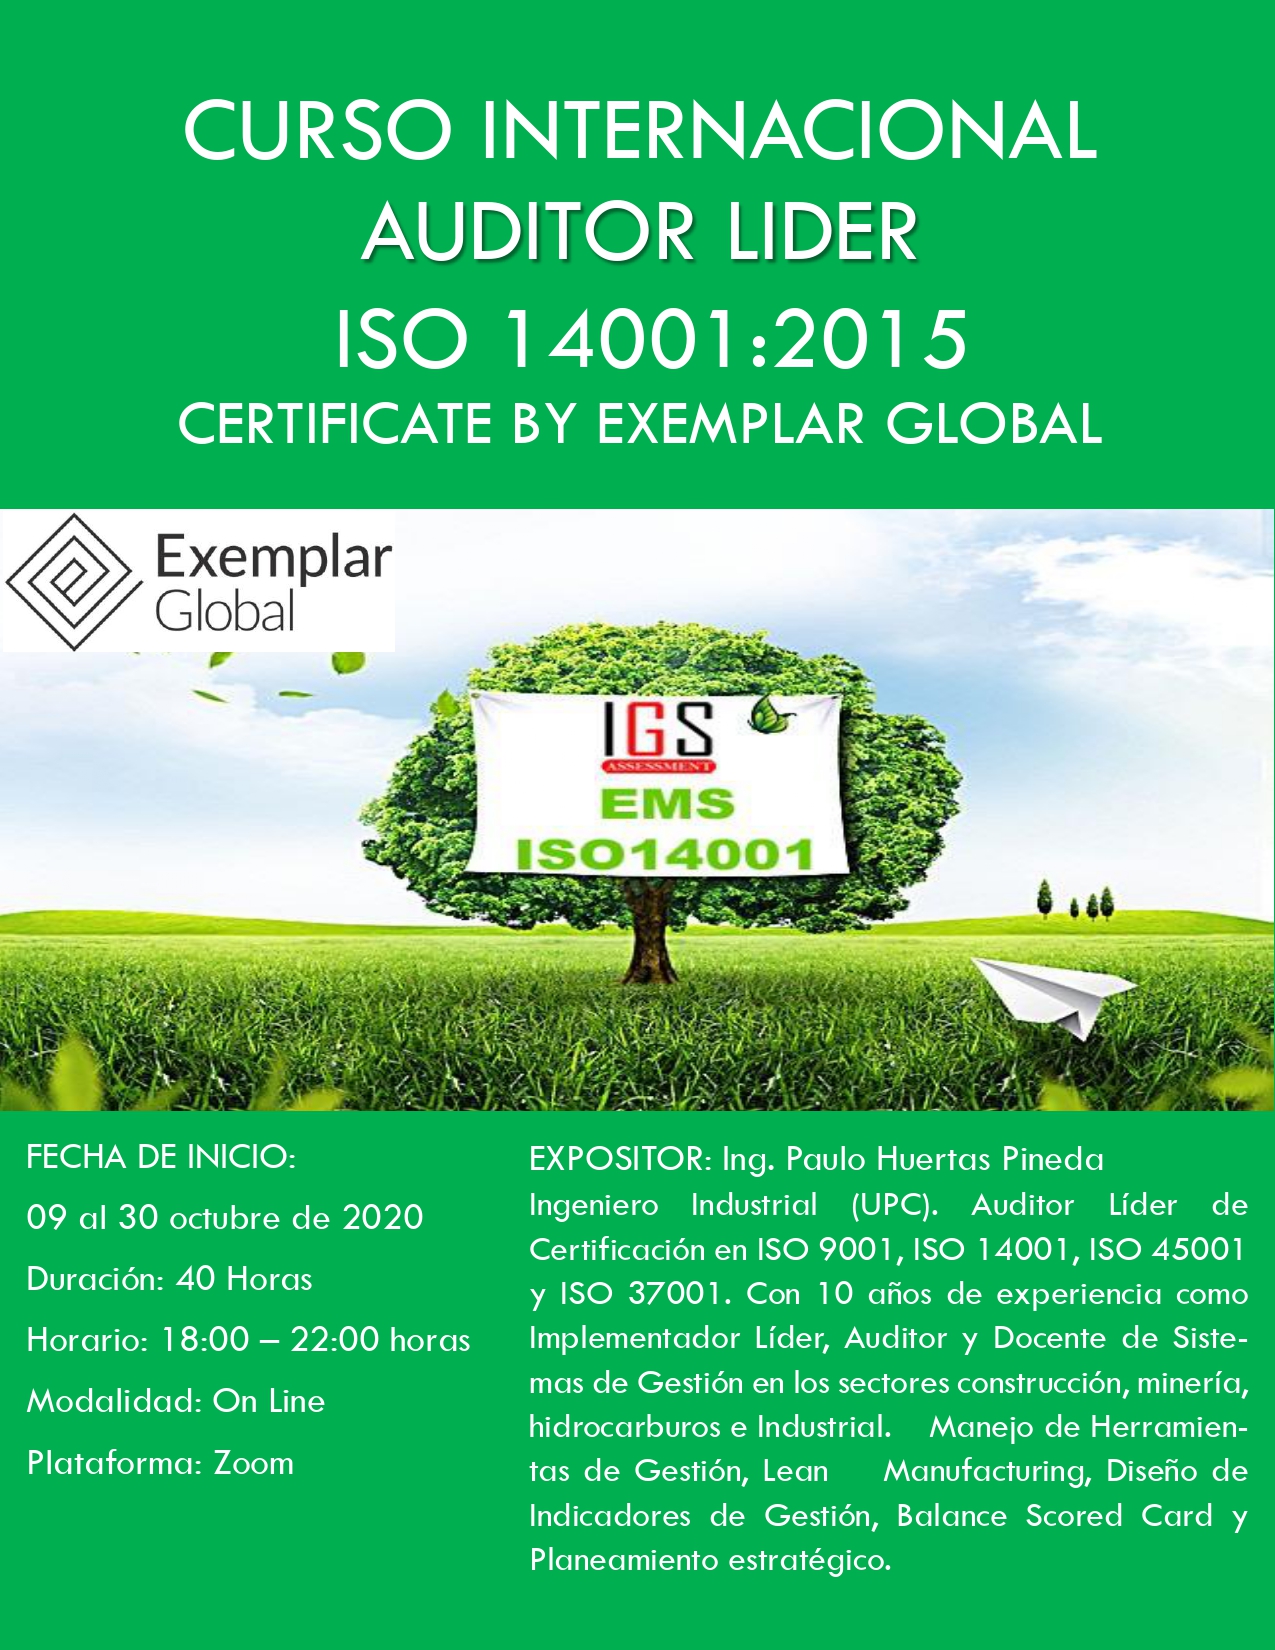 Curso Internacional de Auditor Lider ISO 14001:2015